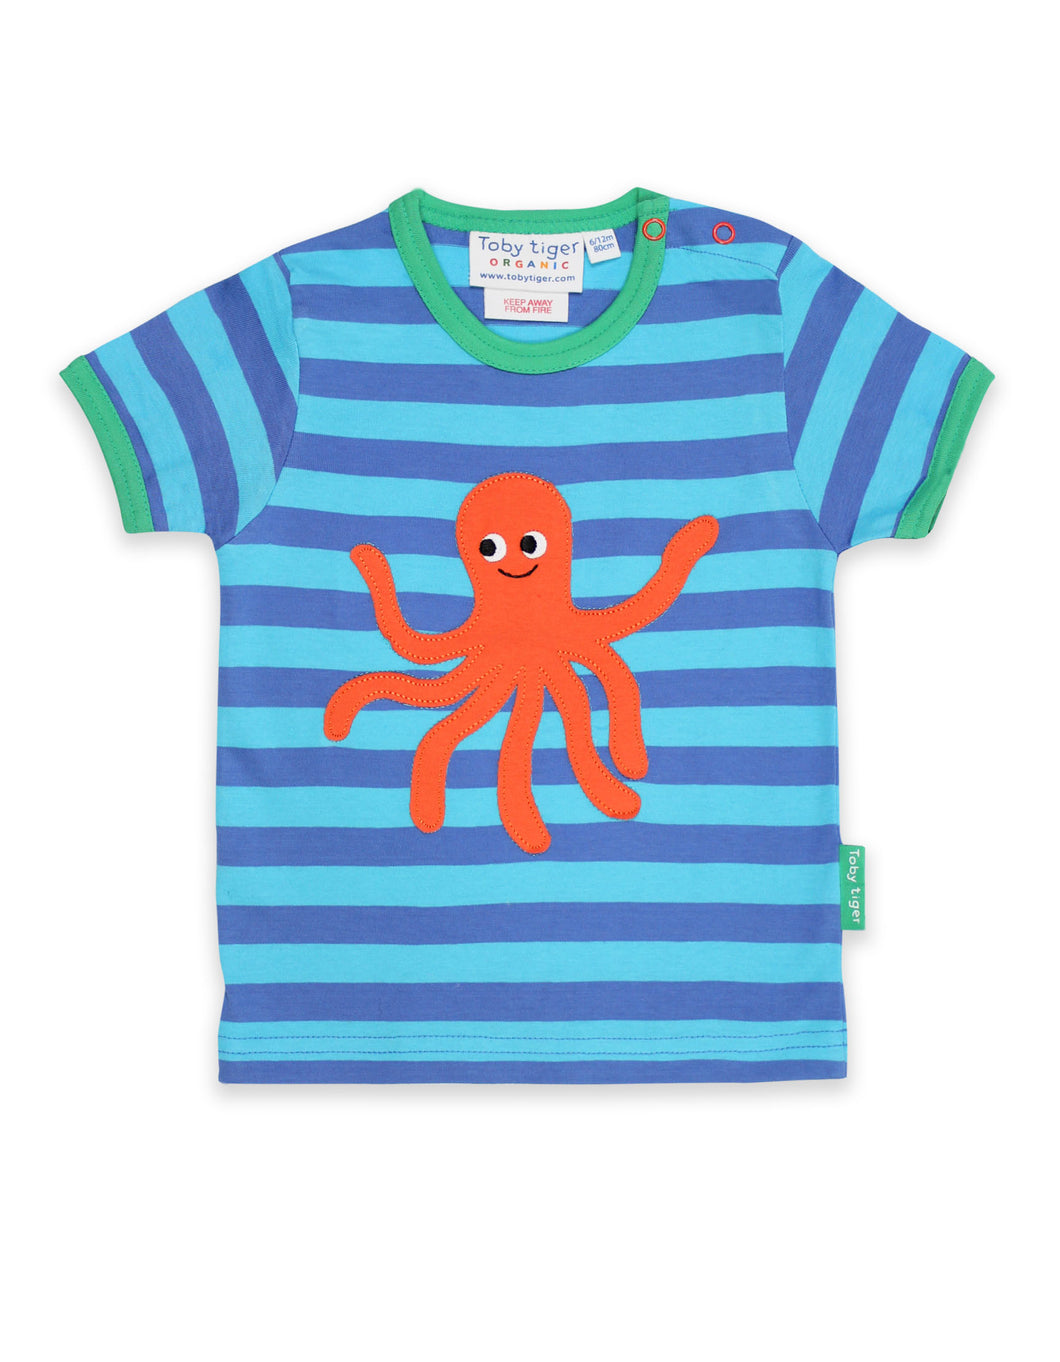 Octopus Applique T-Shirt